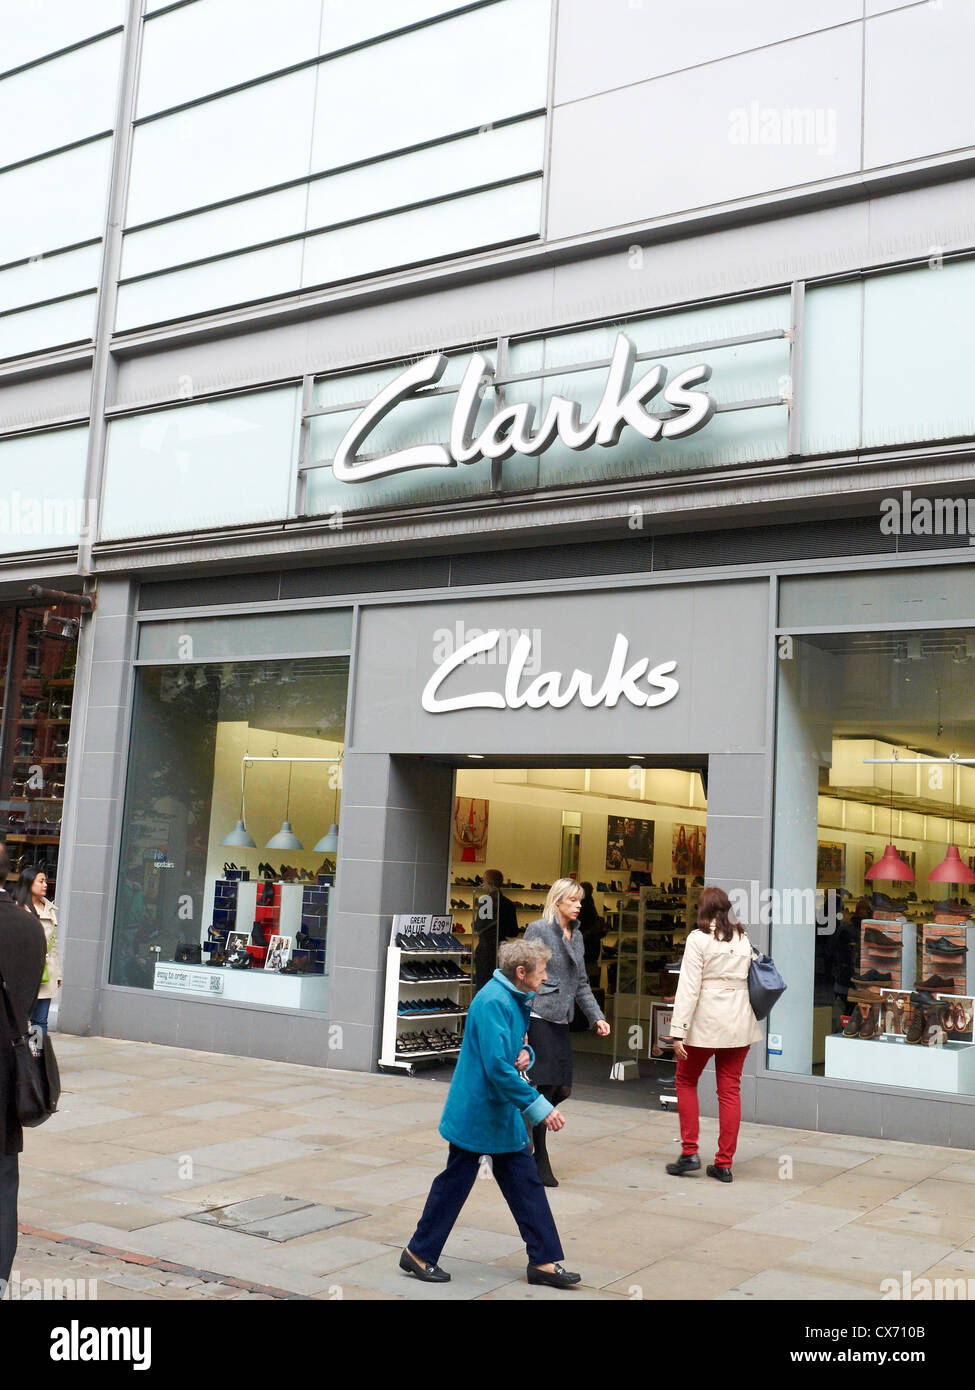 Clarks shop on Market Street Manchester UK Stock Photo - Alamy